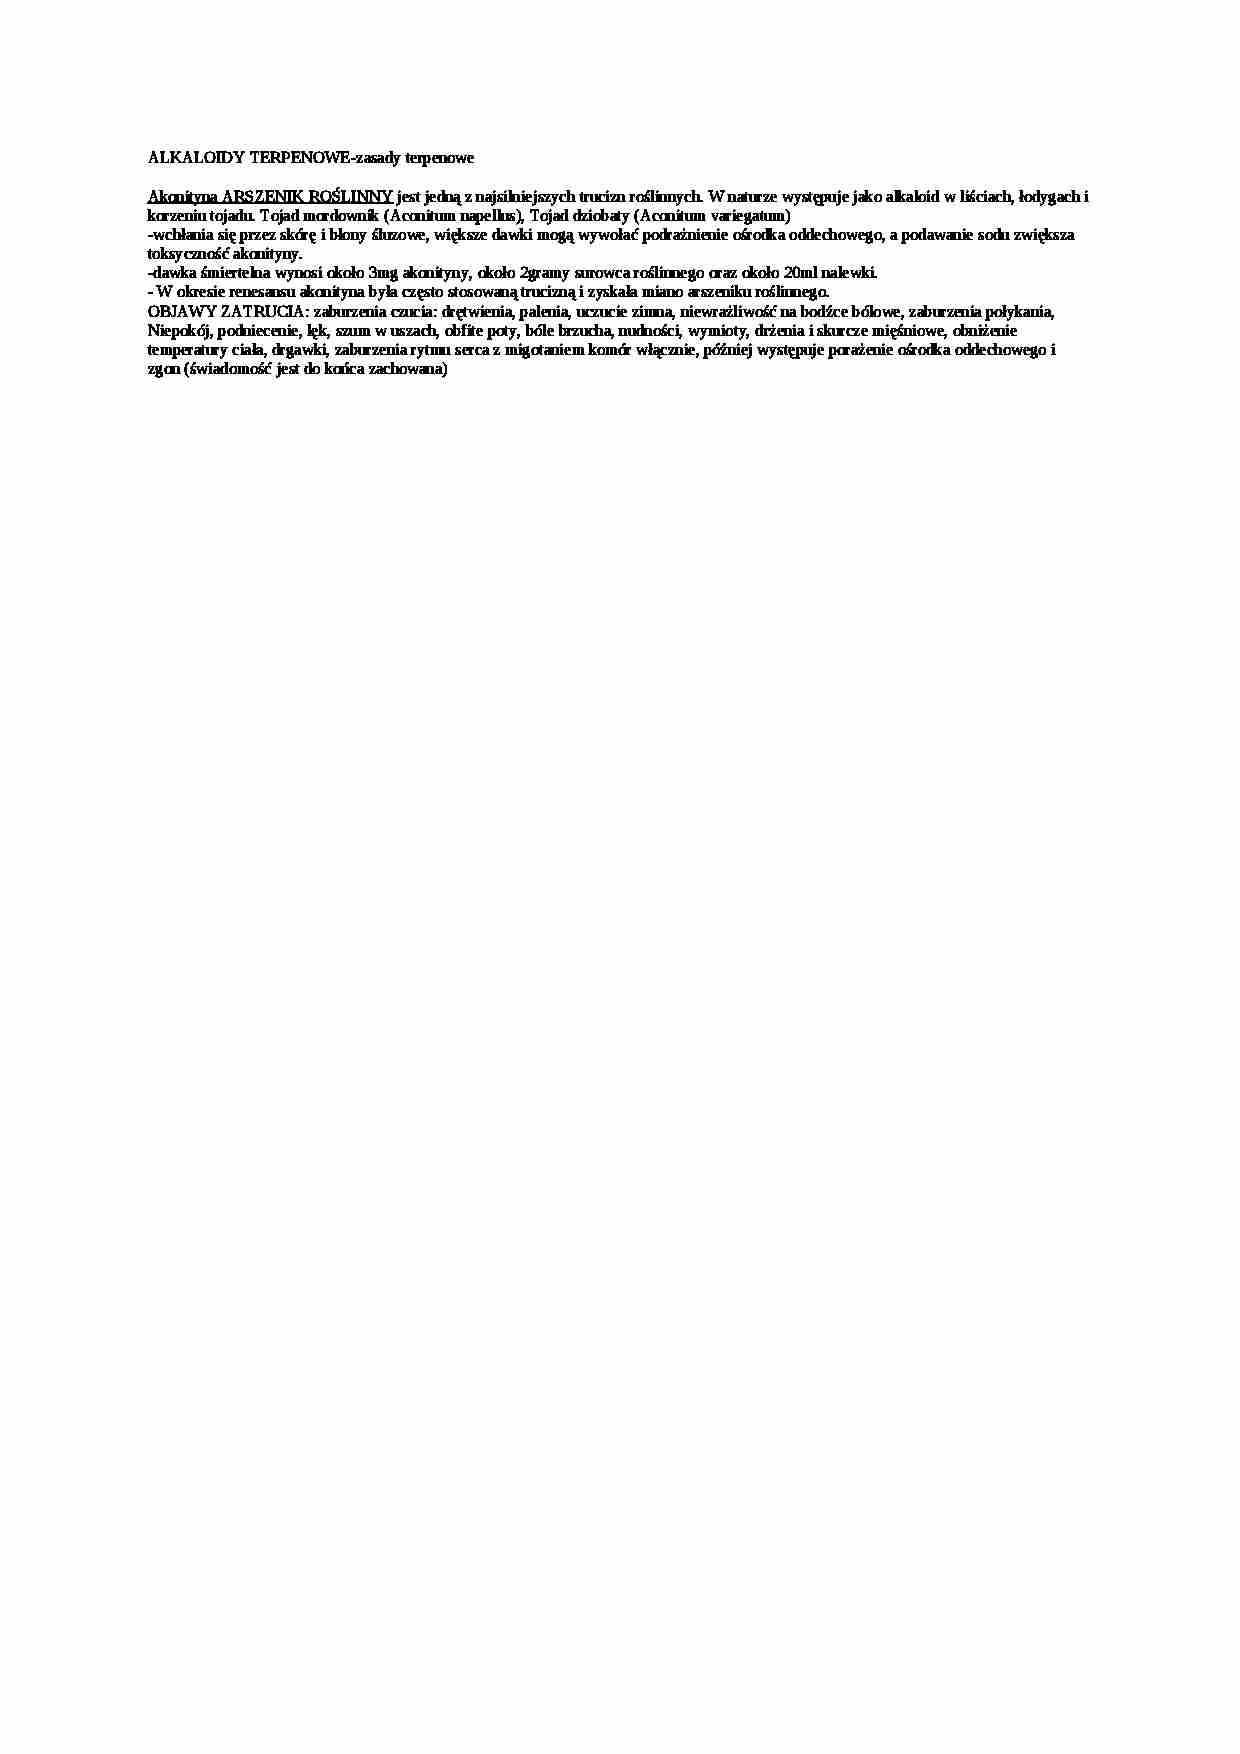 Opracowanie - alkaloidy terpenowe - strona 1